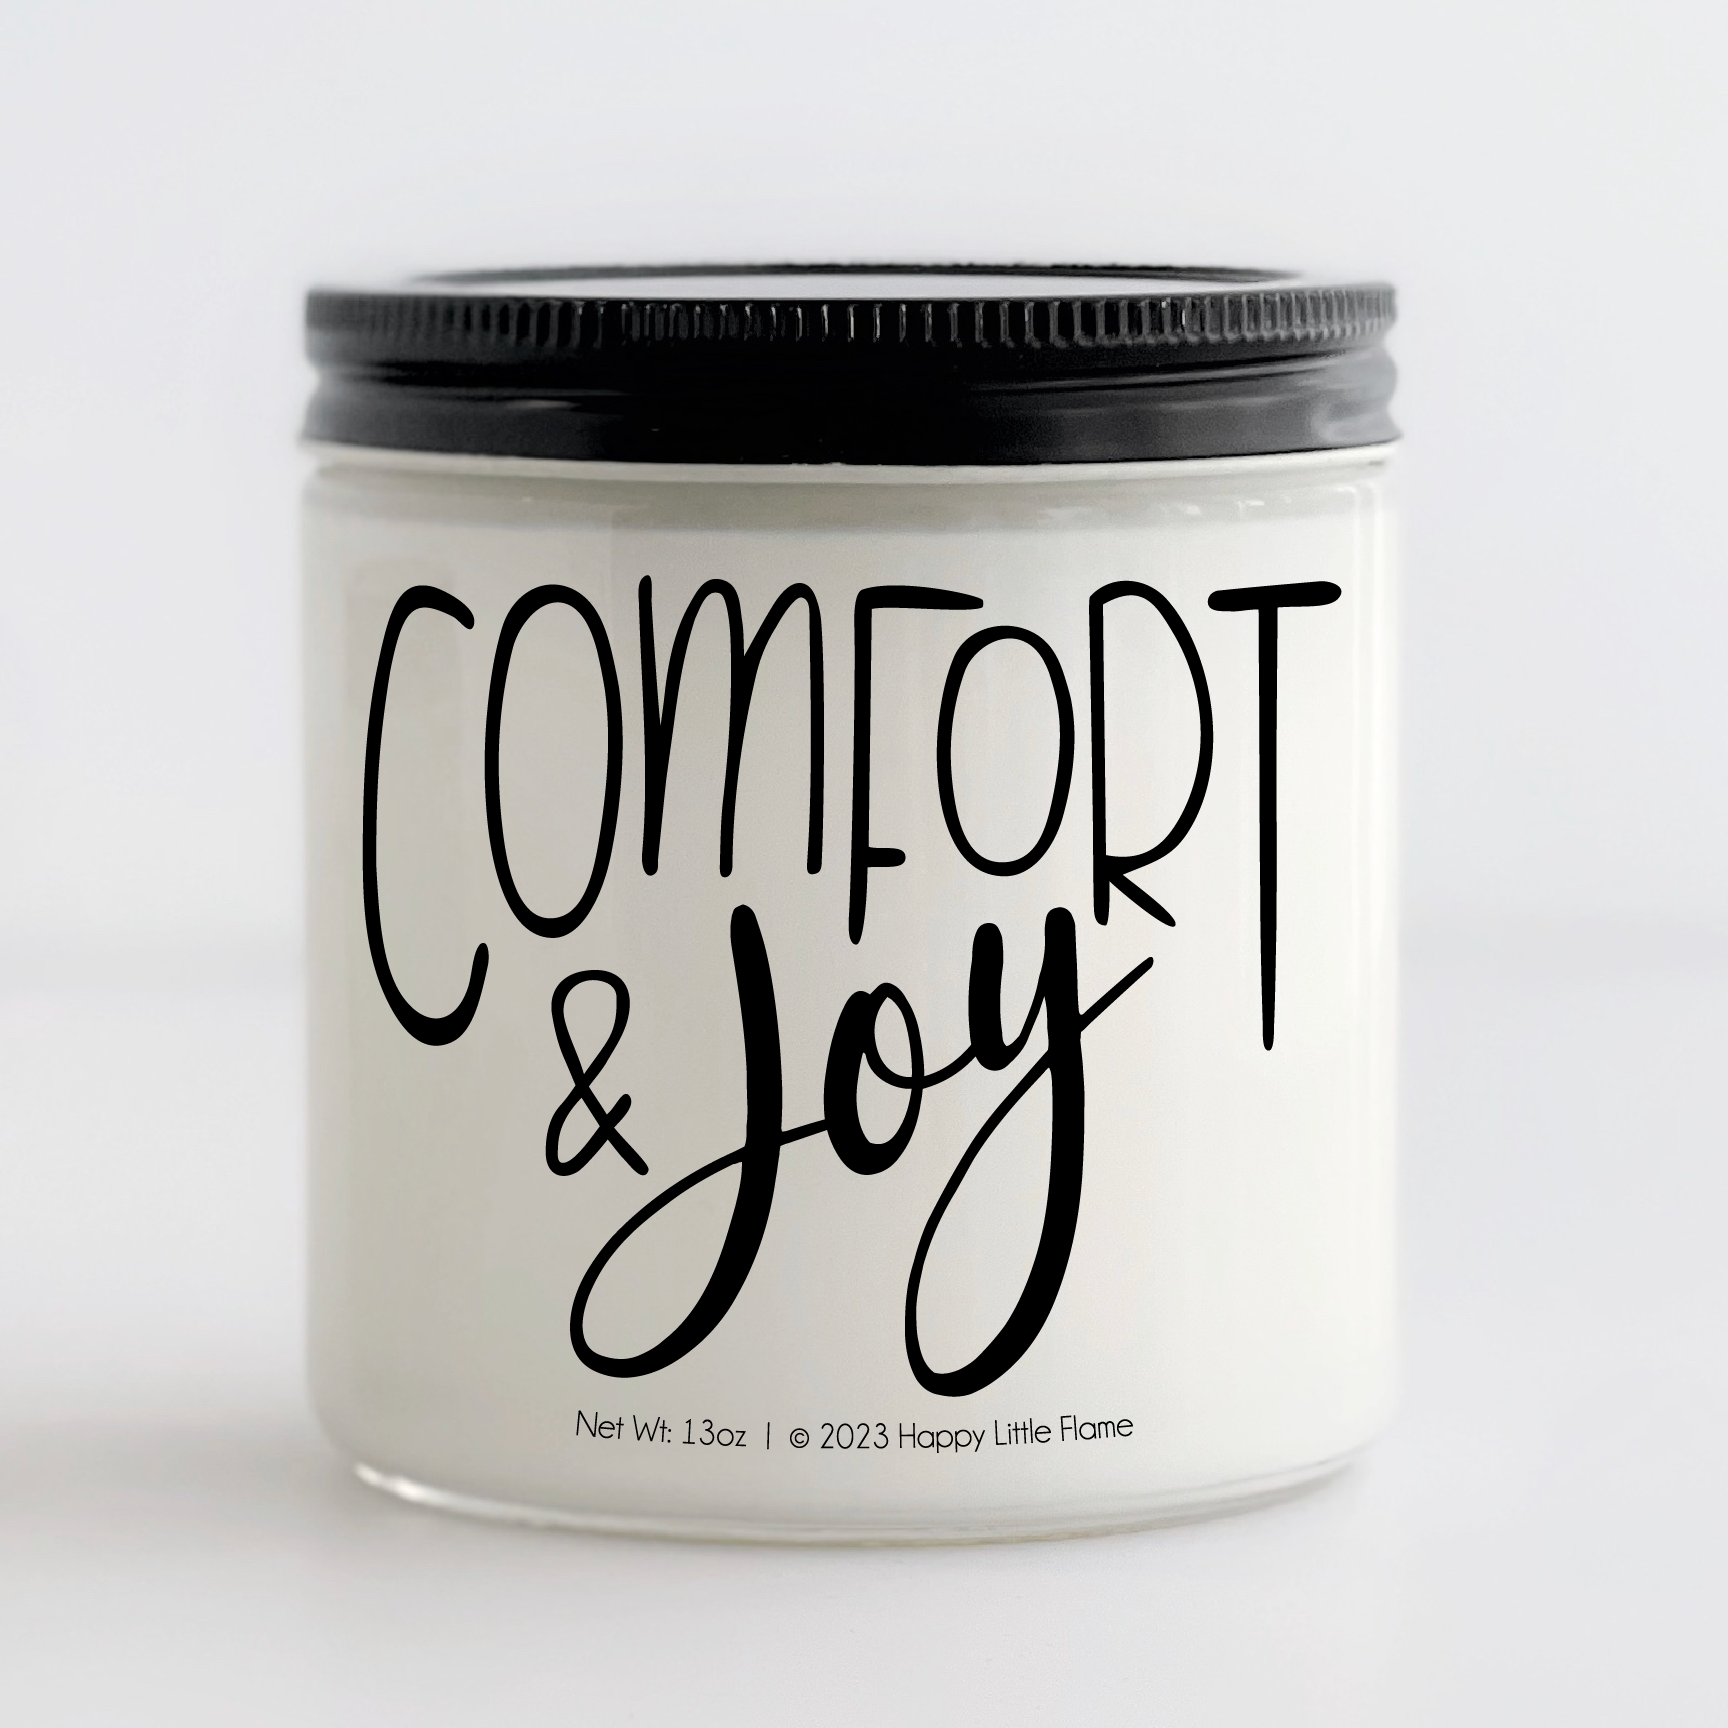 Comfort & Joy – Happy Little Flame